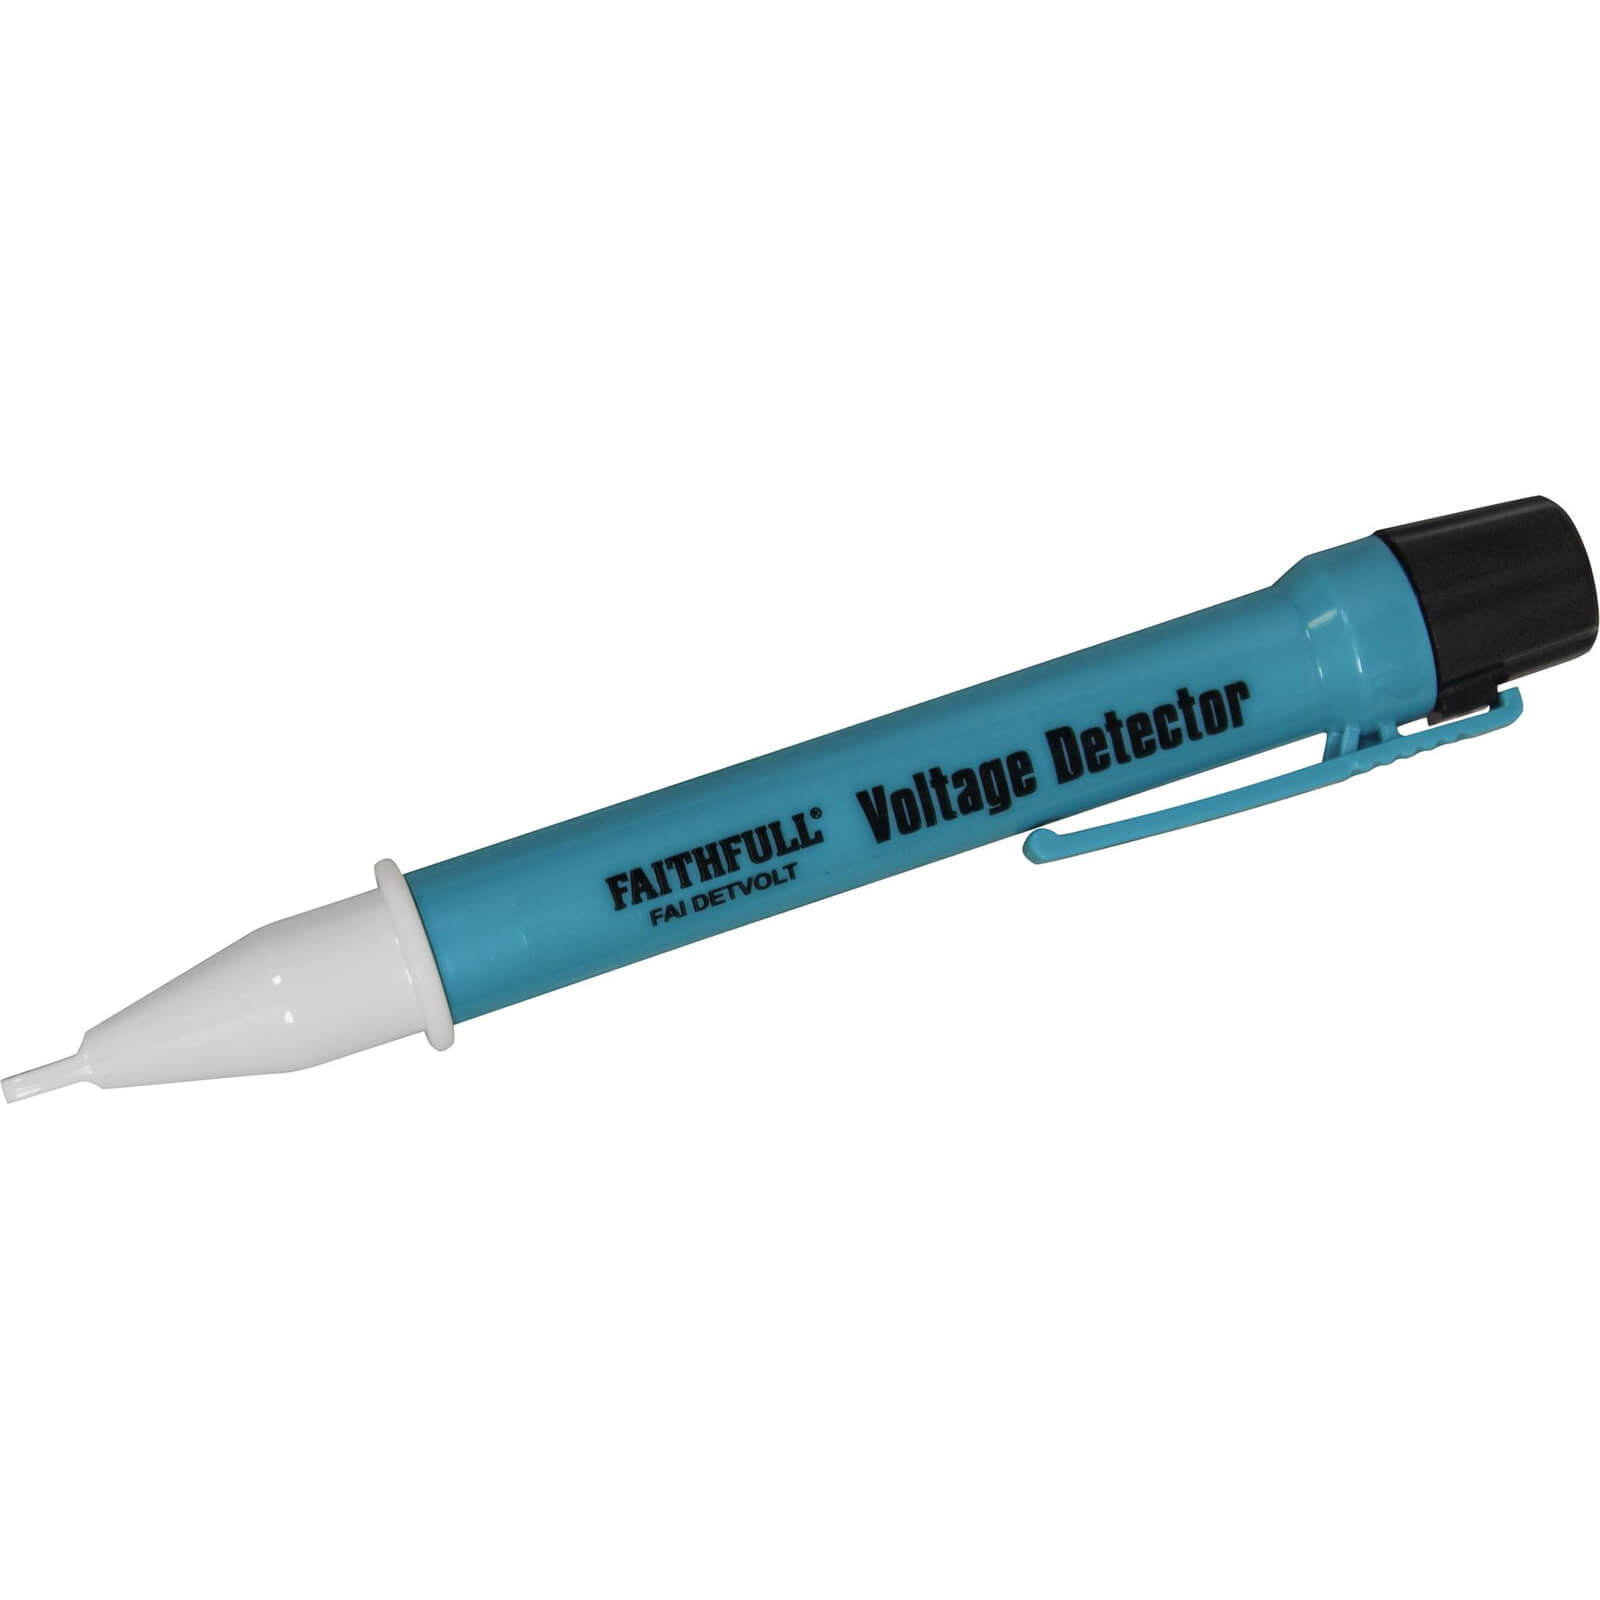 Faithfull Pen Voltage Detector 50-1000VAC